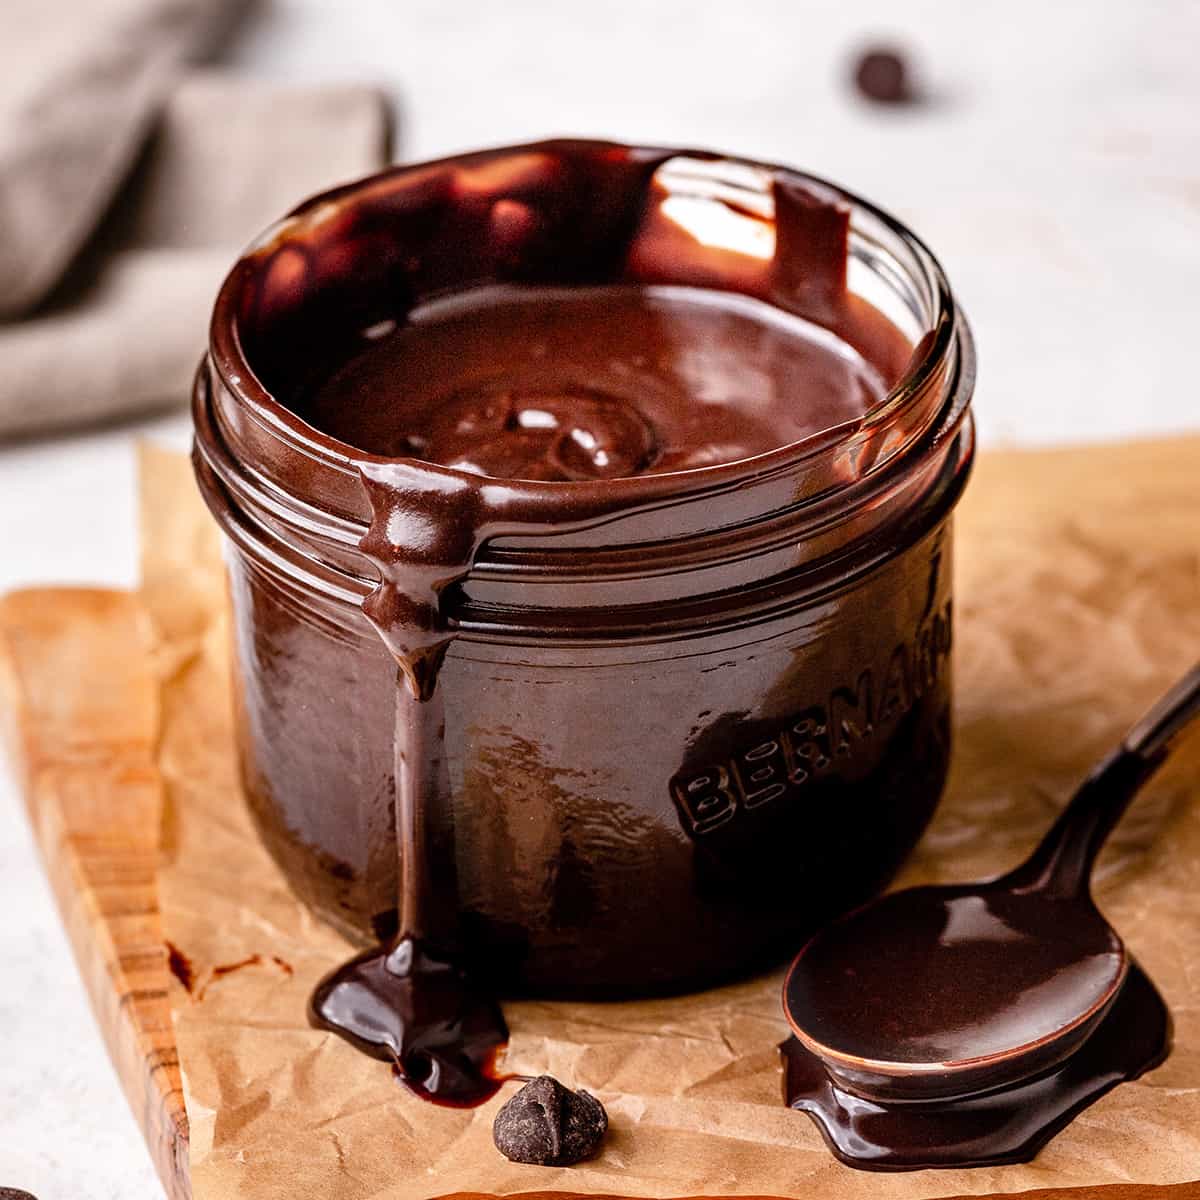 Chocolate Sauce in a glass jar